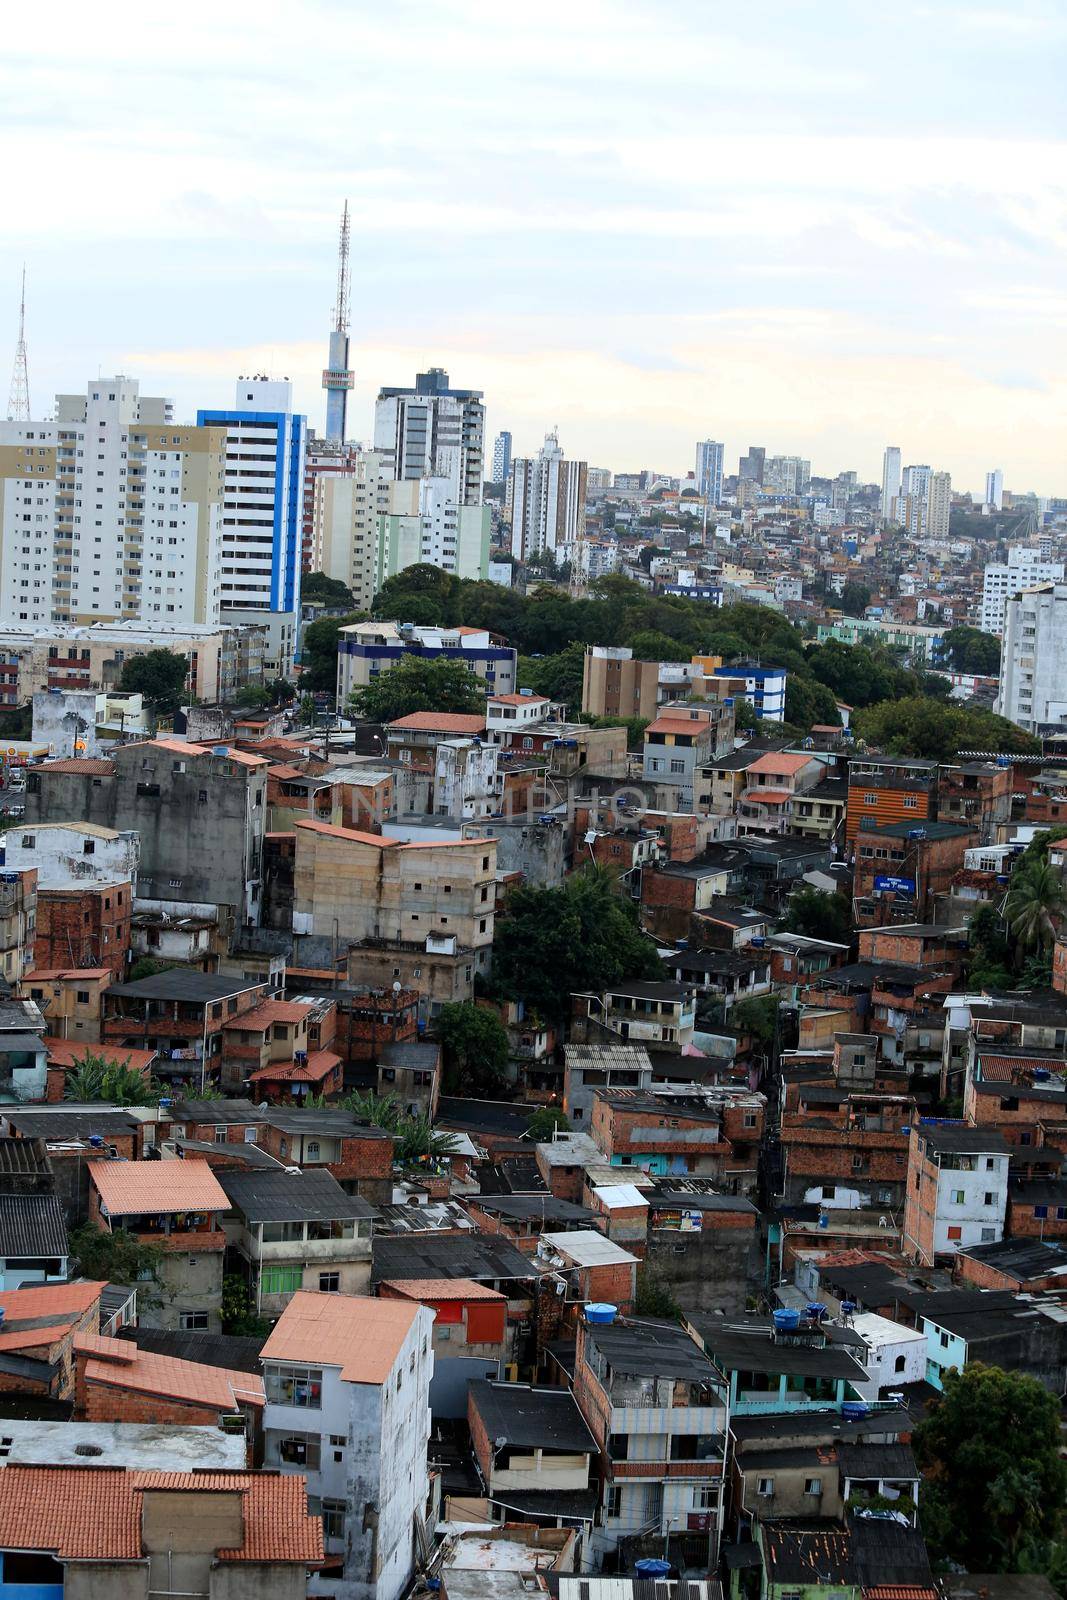 salvador, bahia, brazil - august 29, 2016: Aerial view of dwellings in favela area in Federacao neighborhood in Salvador city.